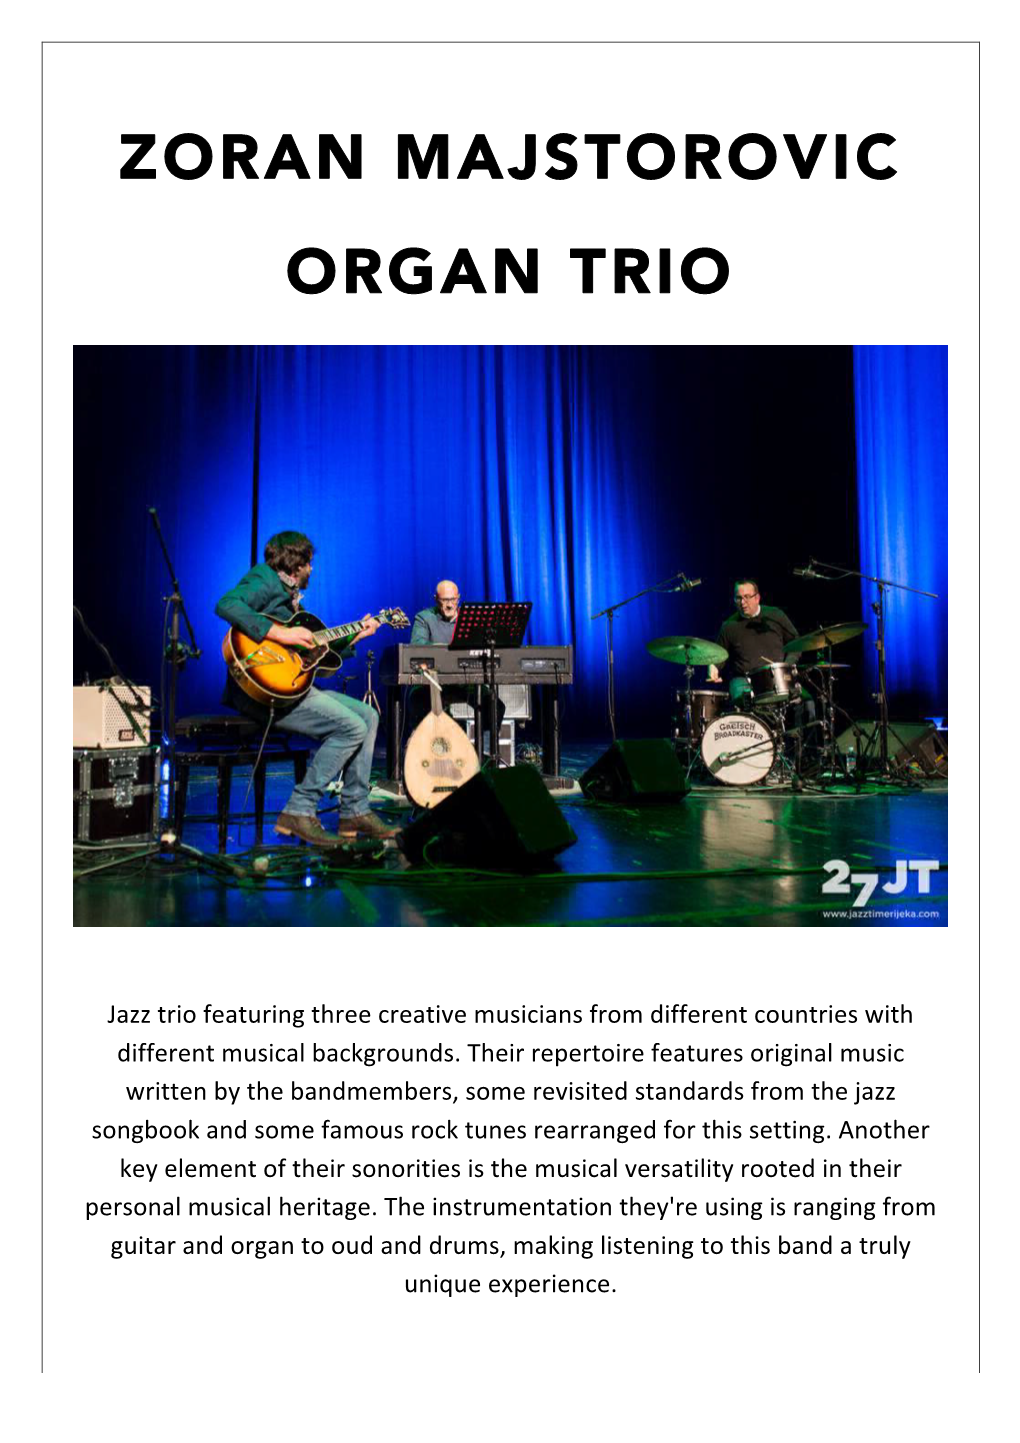 Zoran Majstorovic Organ Trio